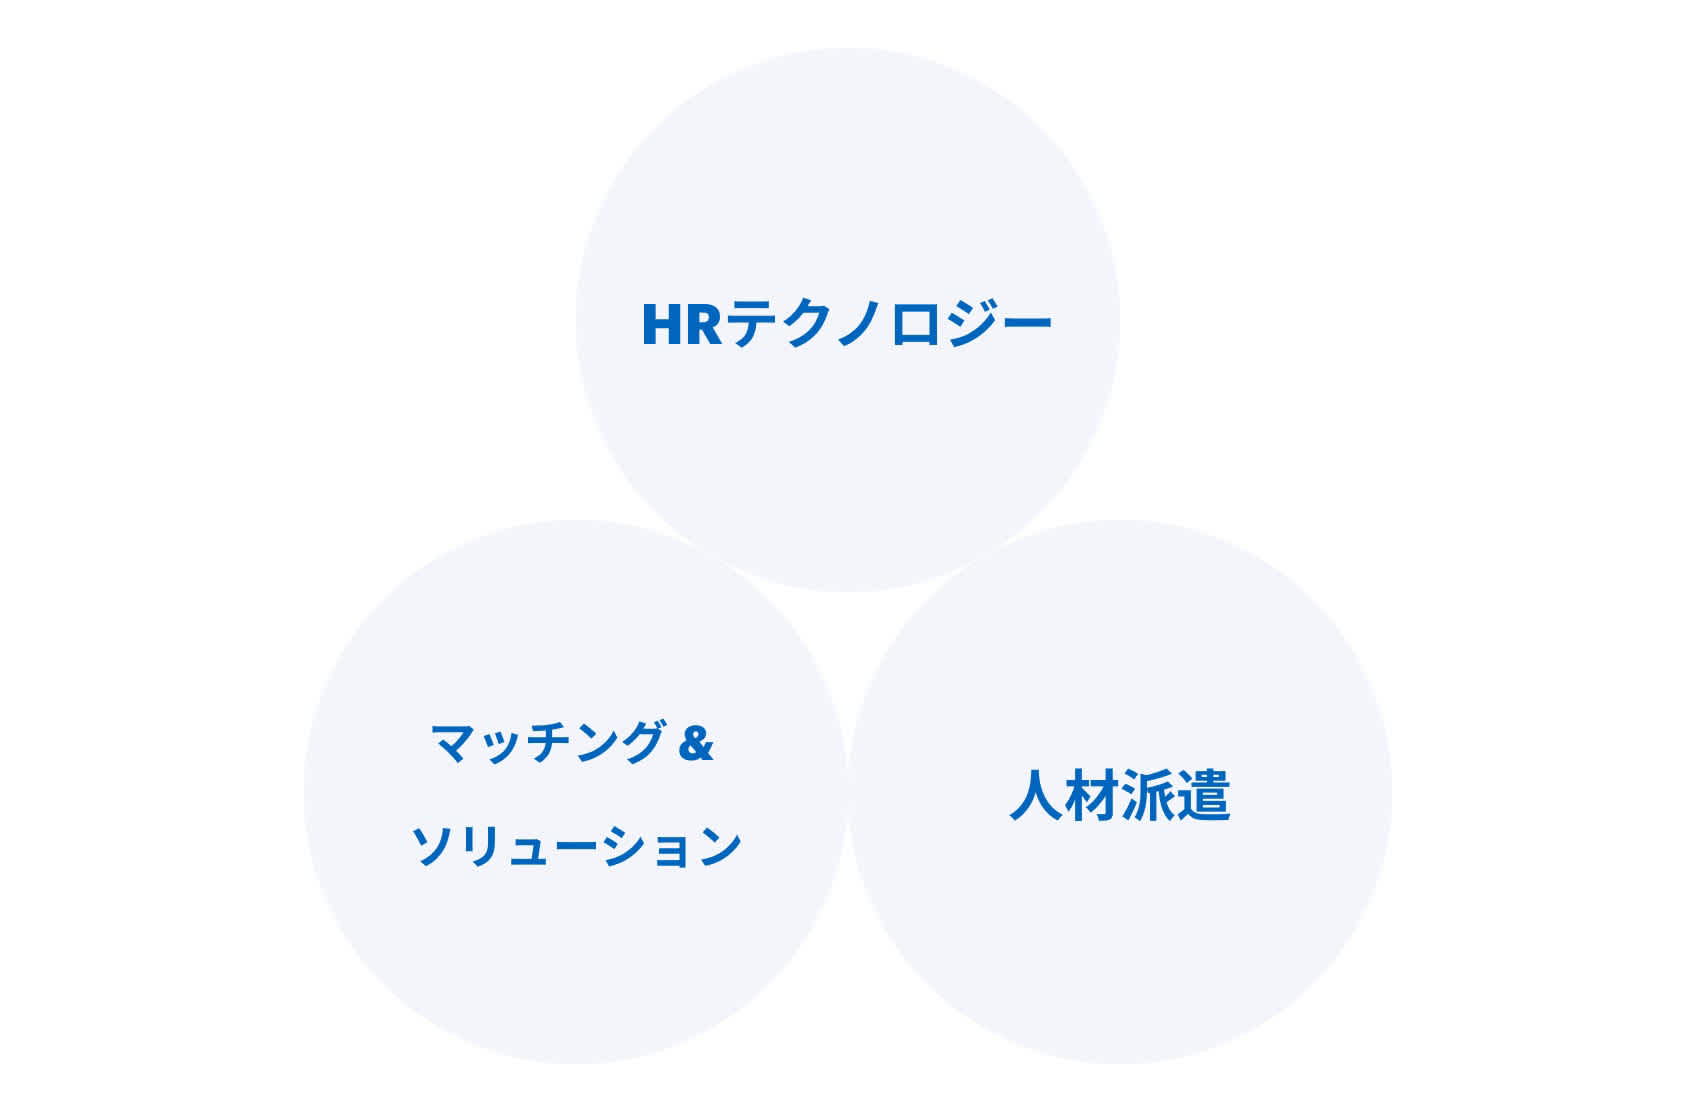 3SBUの繋がりを示す3つの円